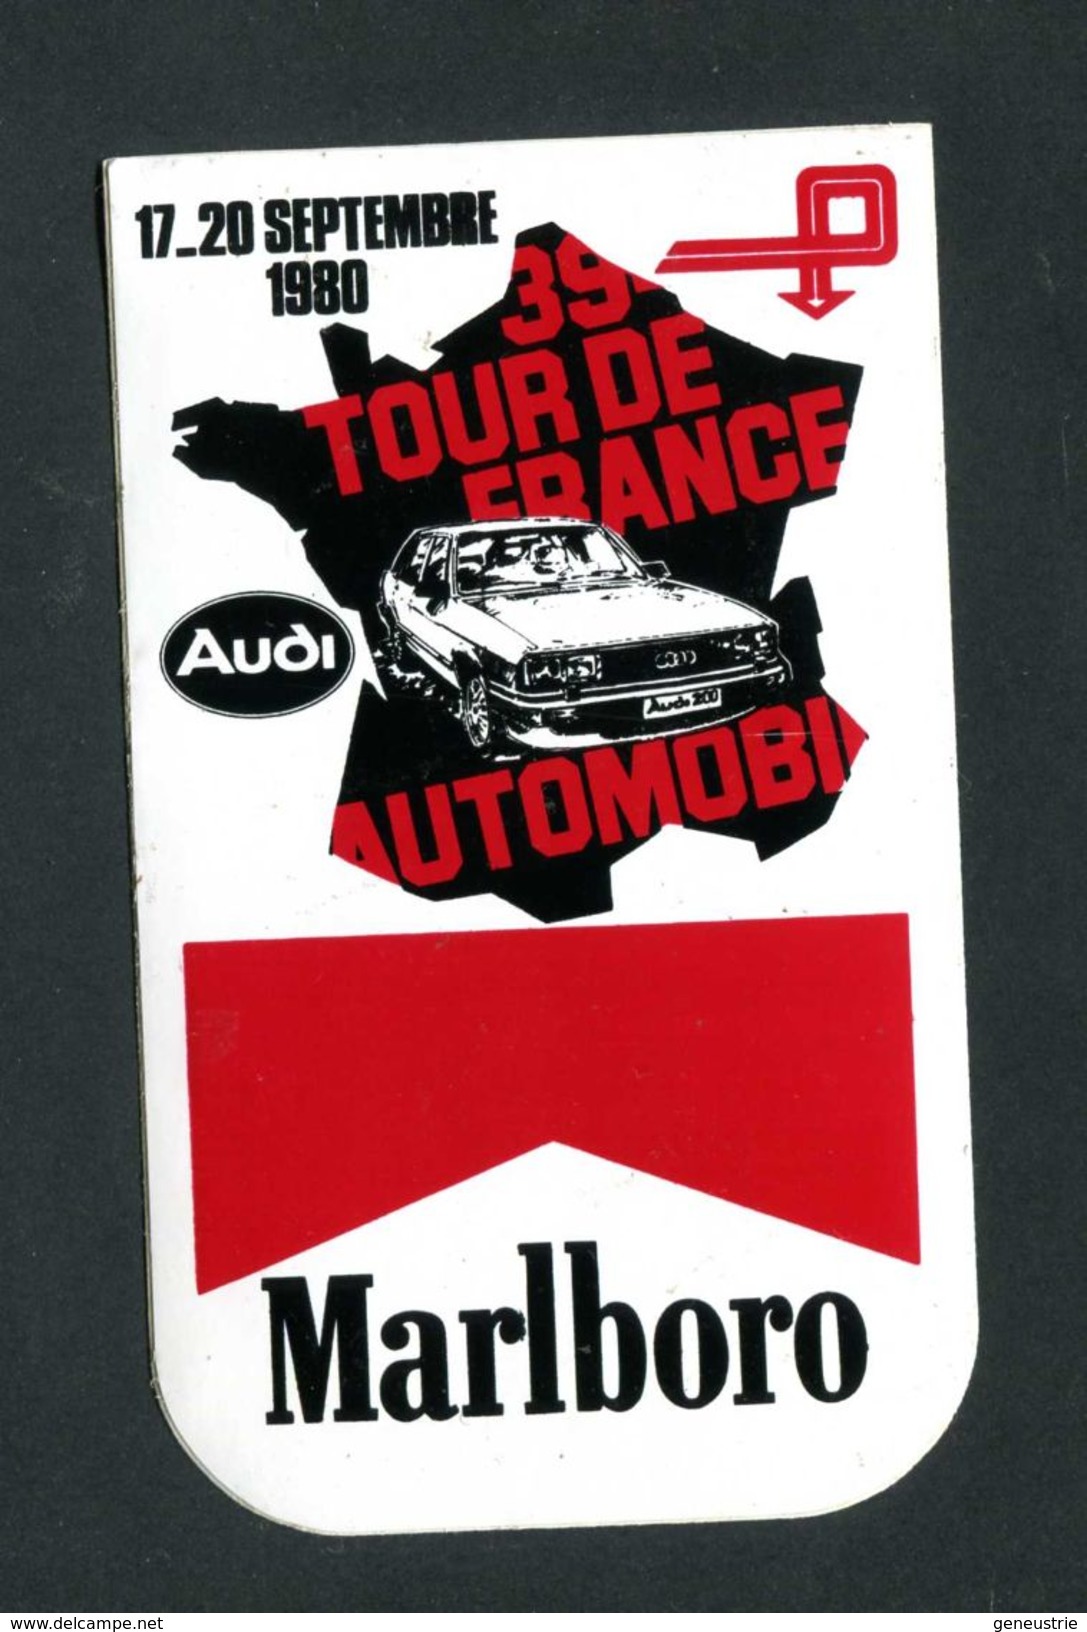 Sticker Autocollant "Marlboro"  39e Tour De France Automobile - Audi - 17-20 Septembre 1980 - Course Automobile - Automobile - F1